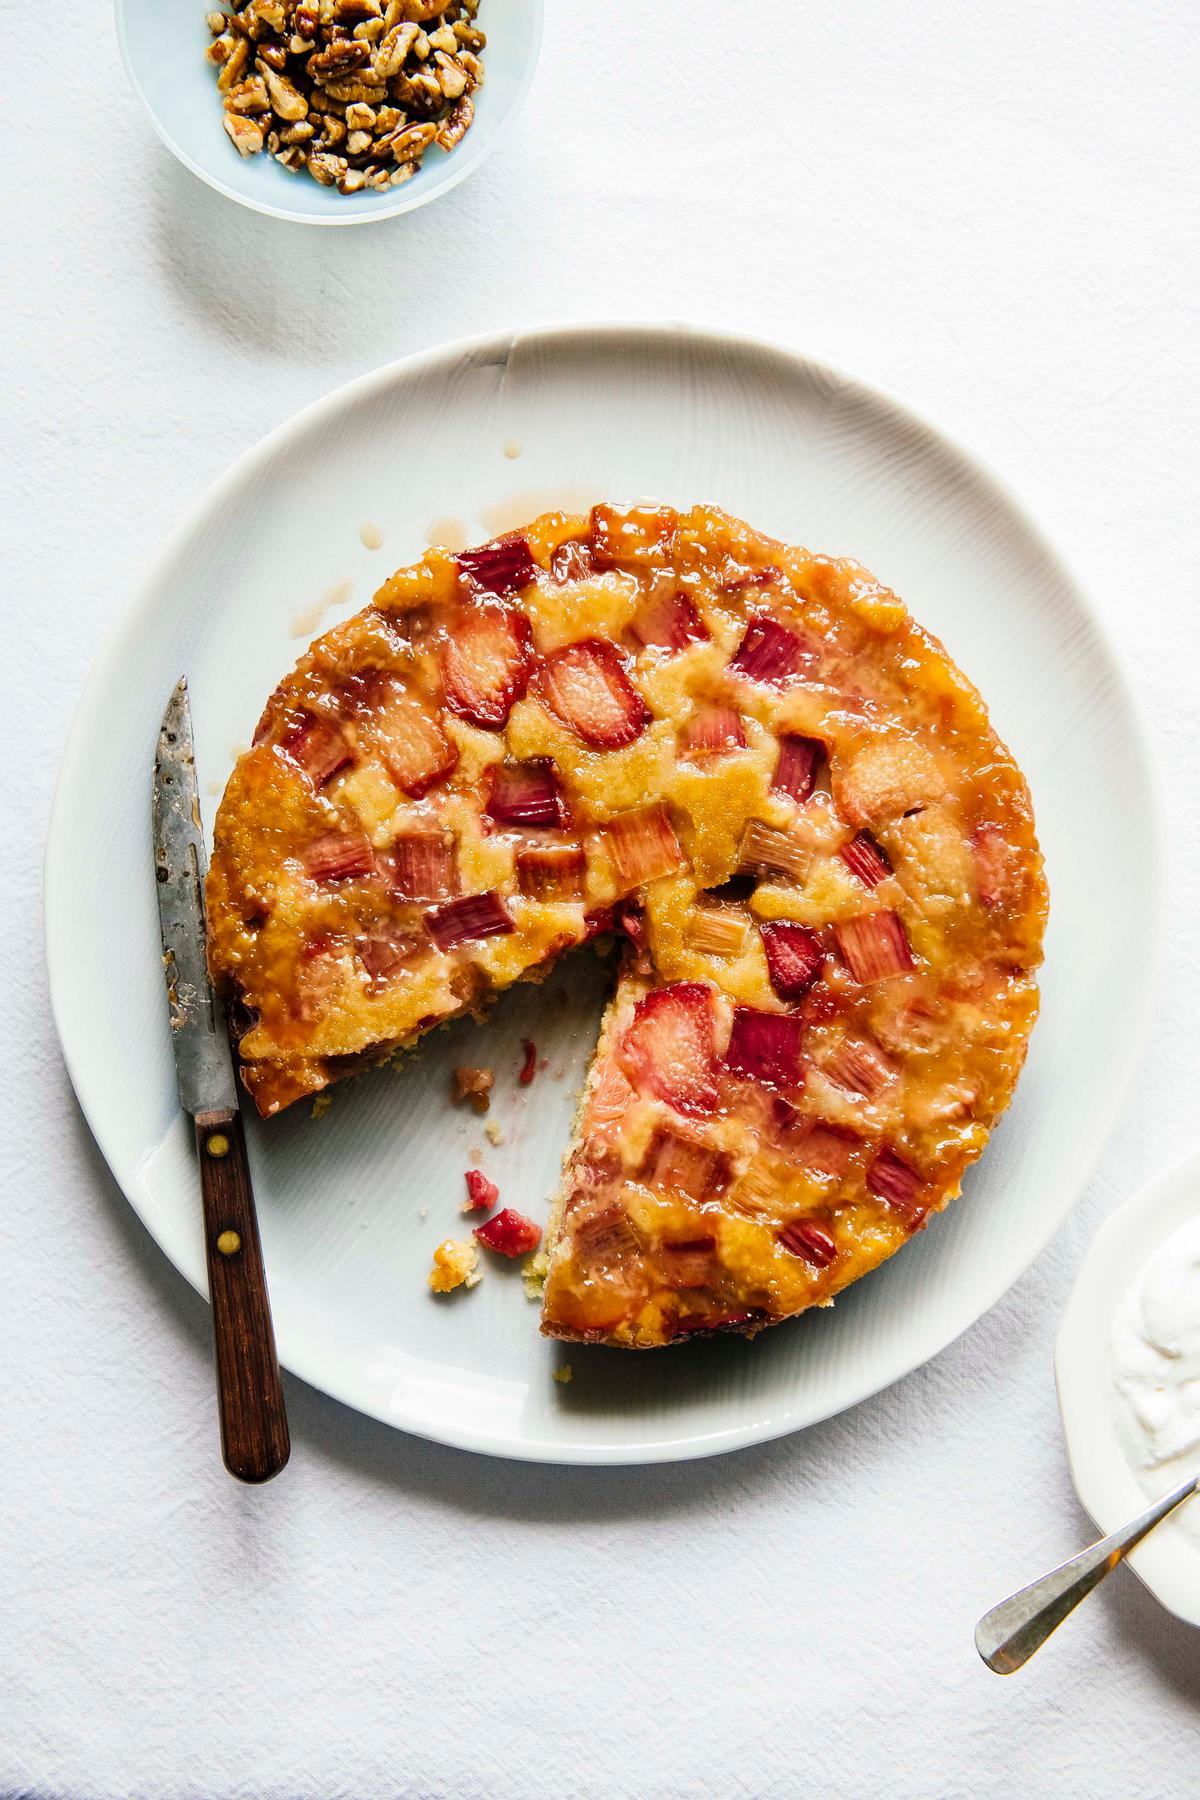 Rhubarb, a spring favorite, shines in an easy upside-down cake. (EE Berger)